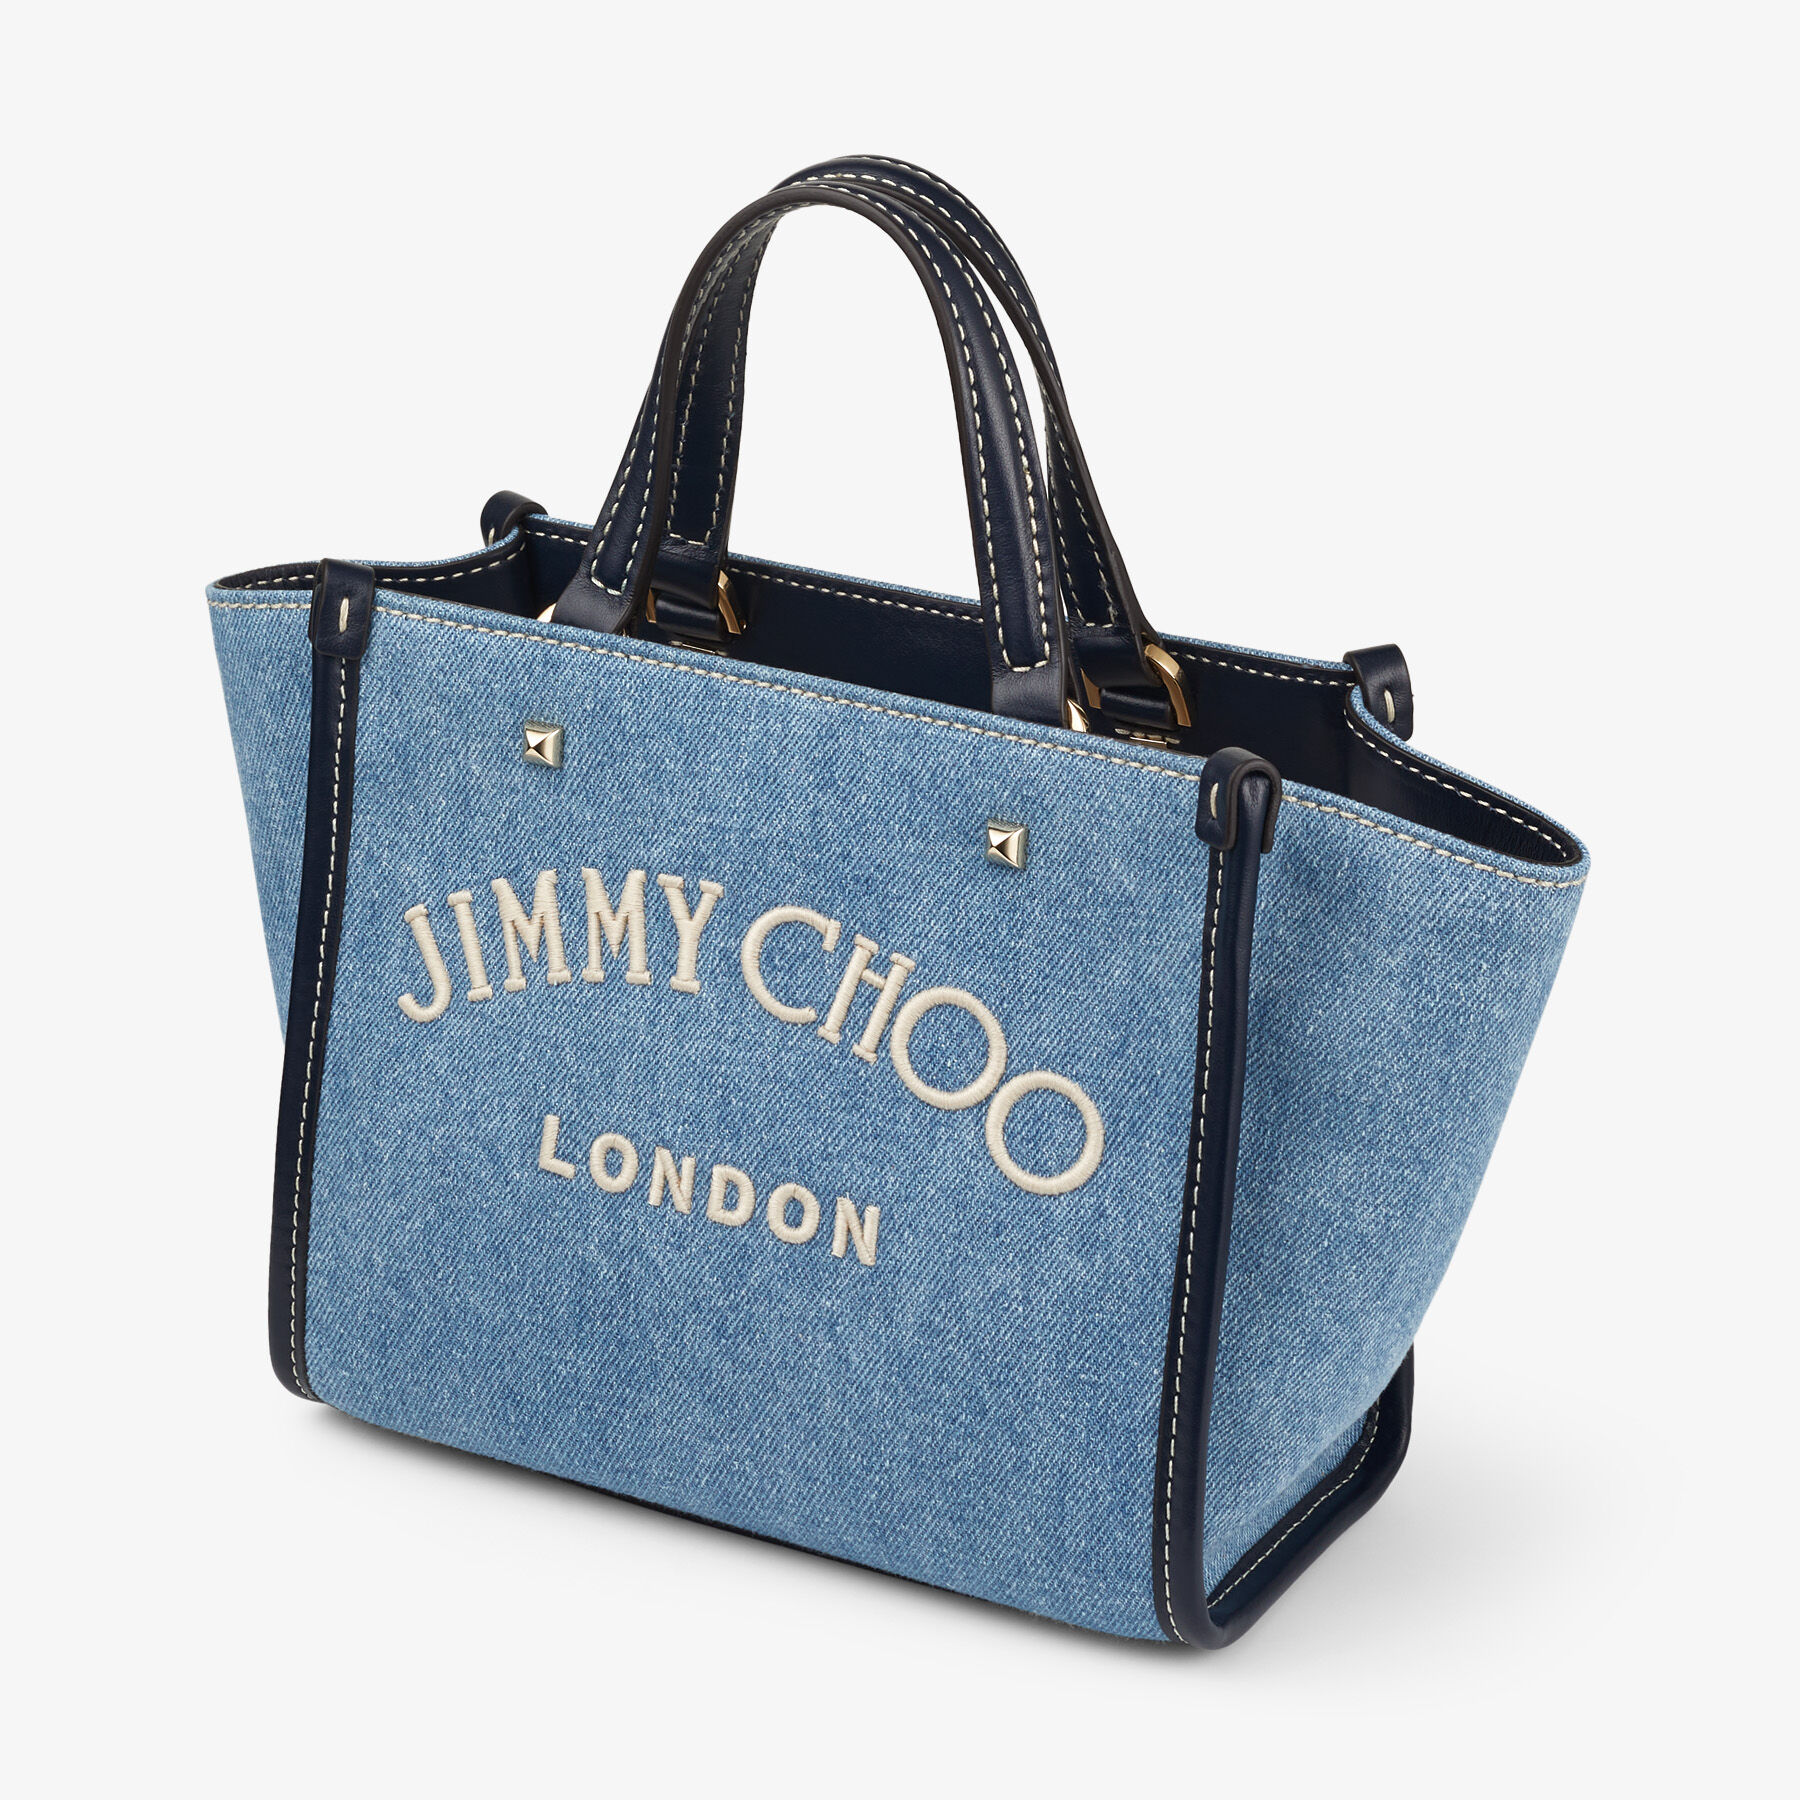 Avenue Tote Bag S - Jimmy Choo RoW